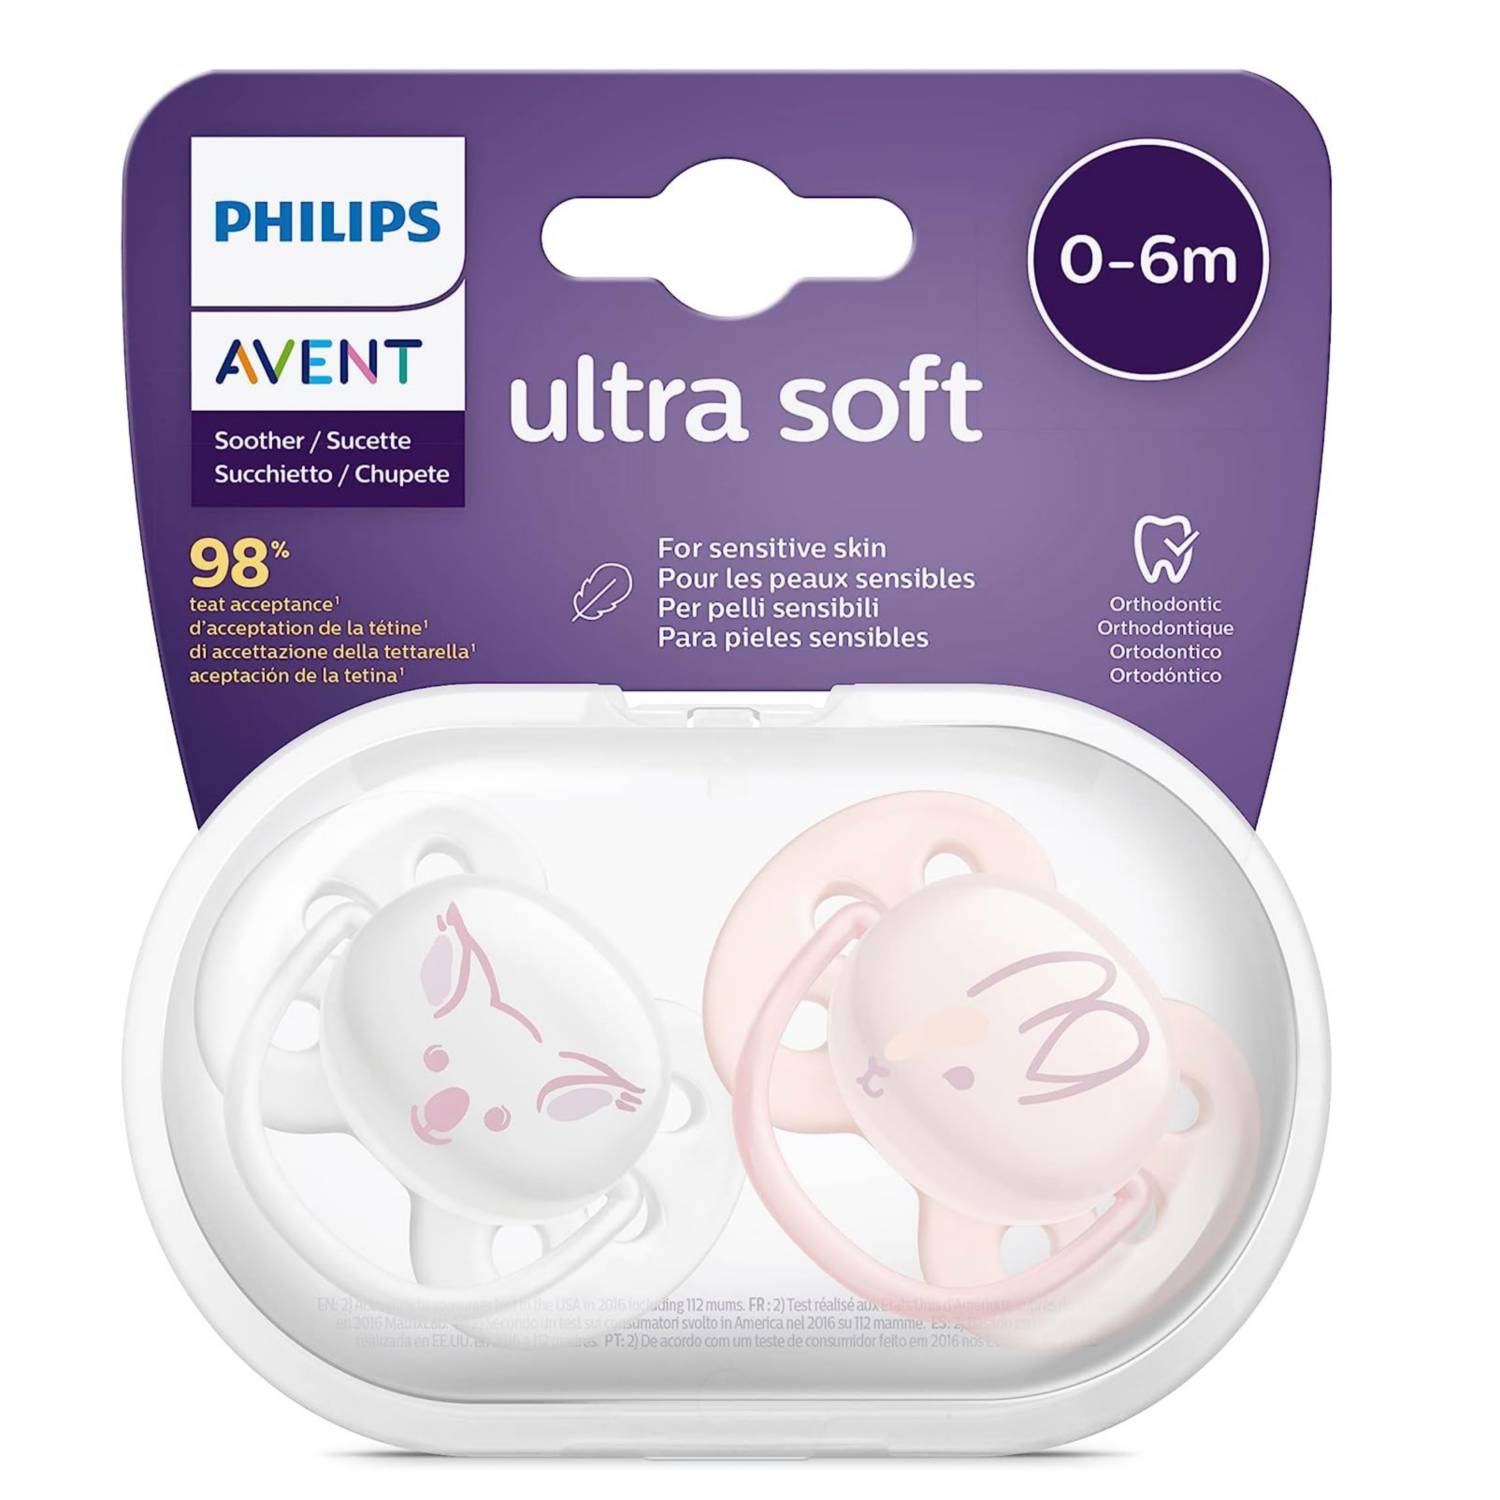 Dos Chupetes ultra soft neutro para bebés de 0 a 6 meses, Avent.